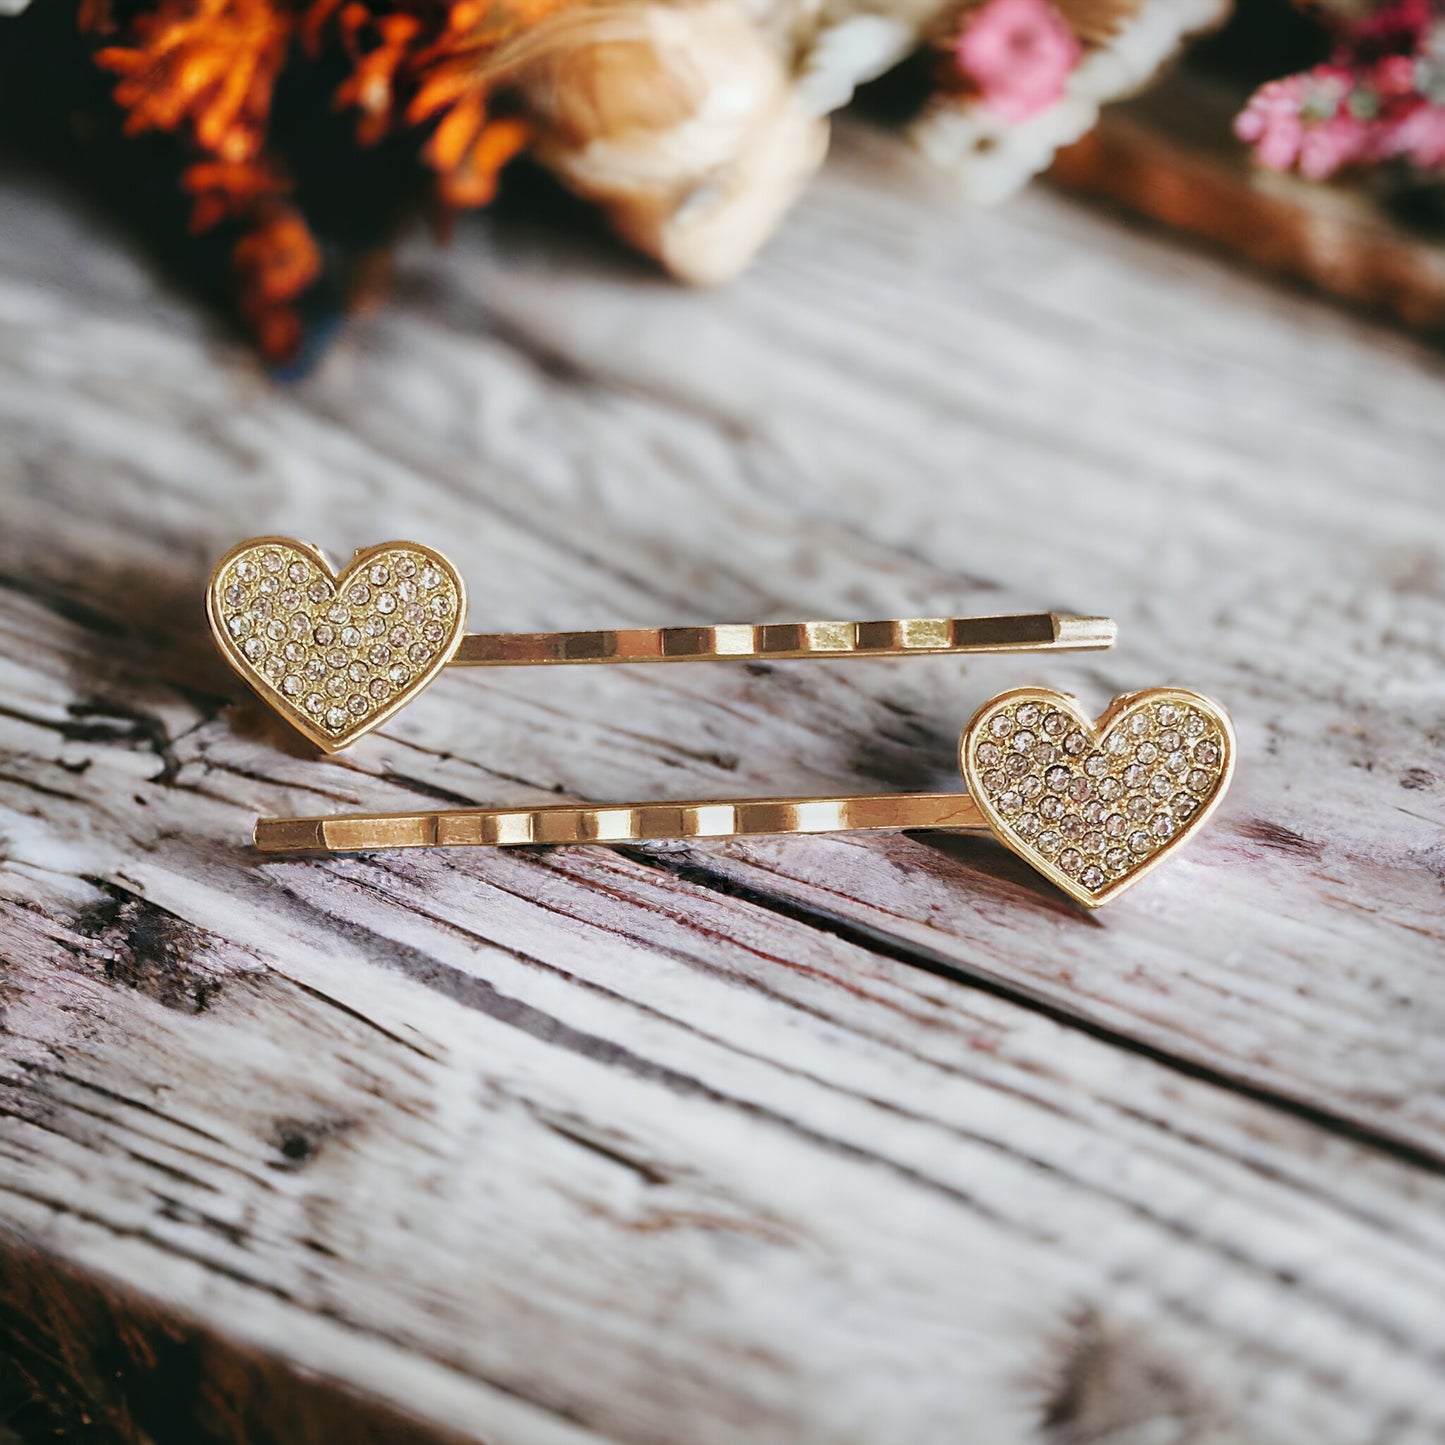 14k Gold-Plated Rhinestone Heart Hair Pin Set - Elegant & Sparkling Accessories